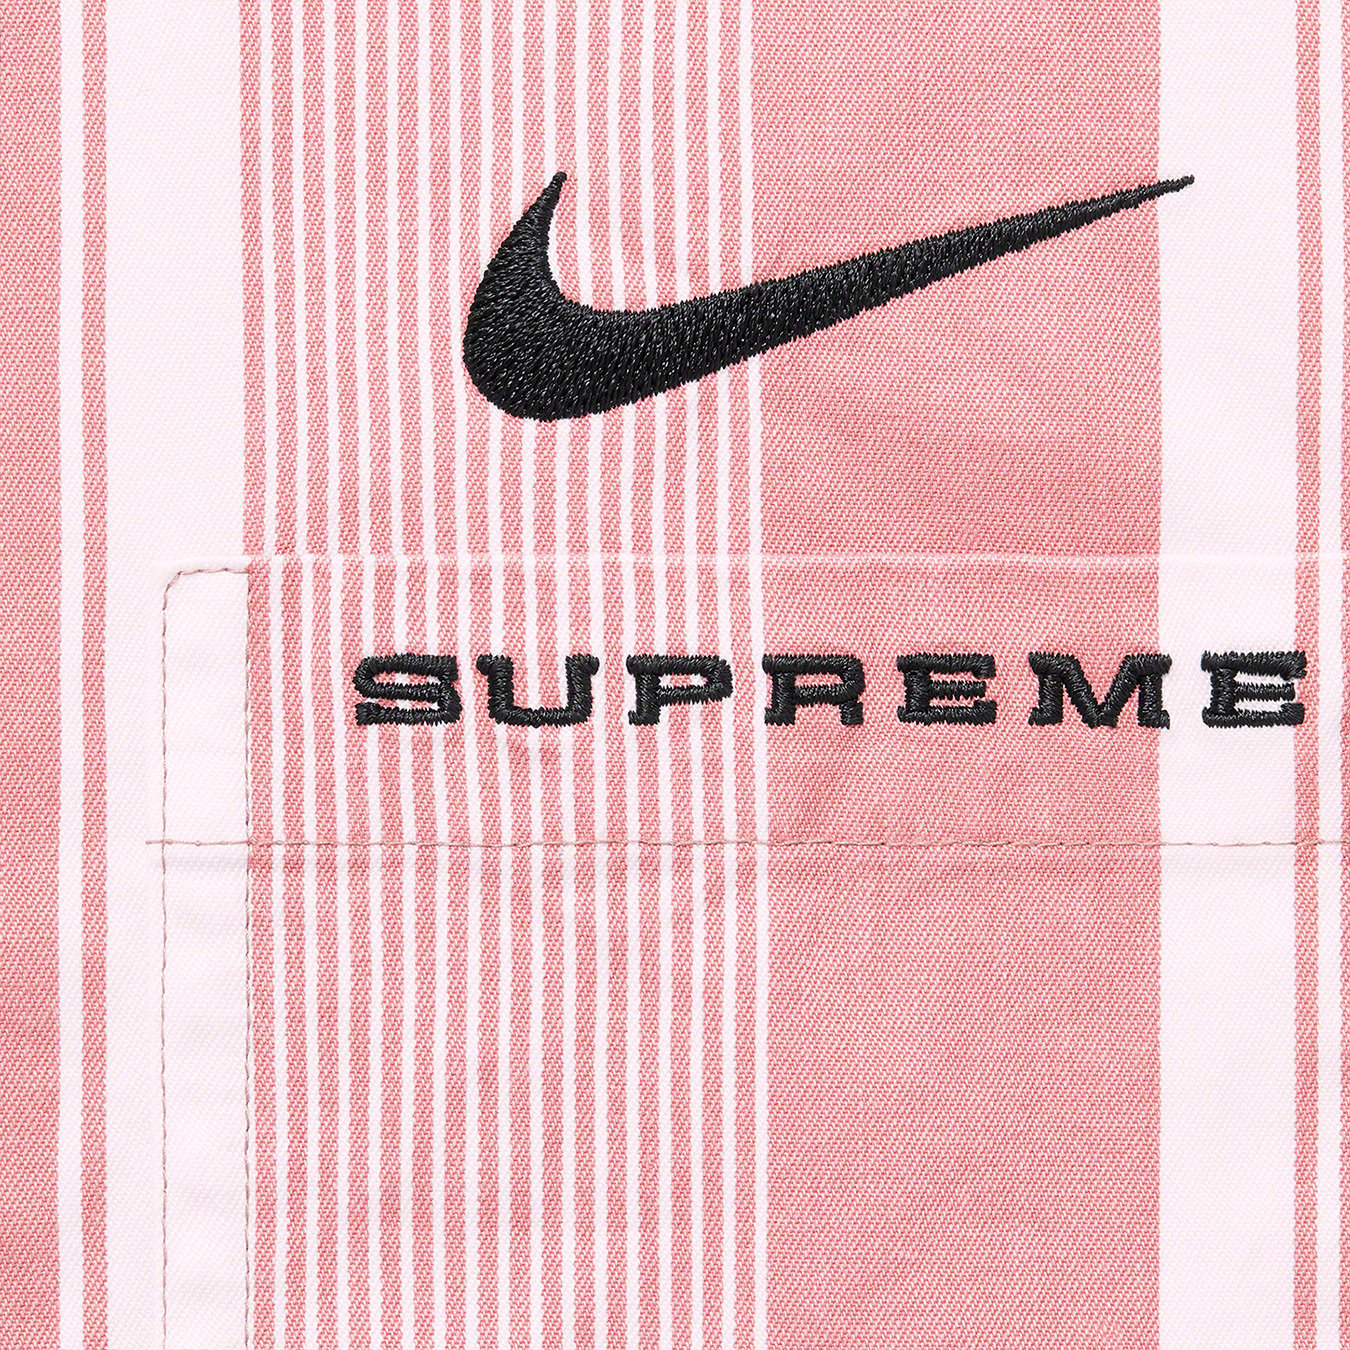 Supreme®/Nike® Cotton Twill Shirt - Supreme Community